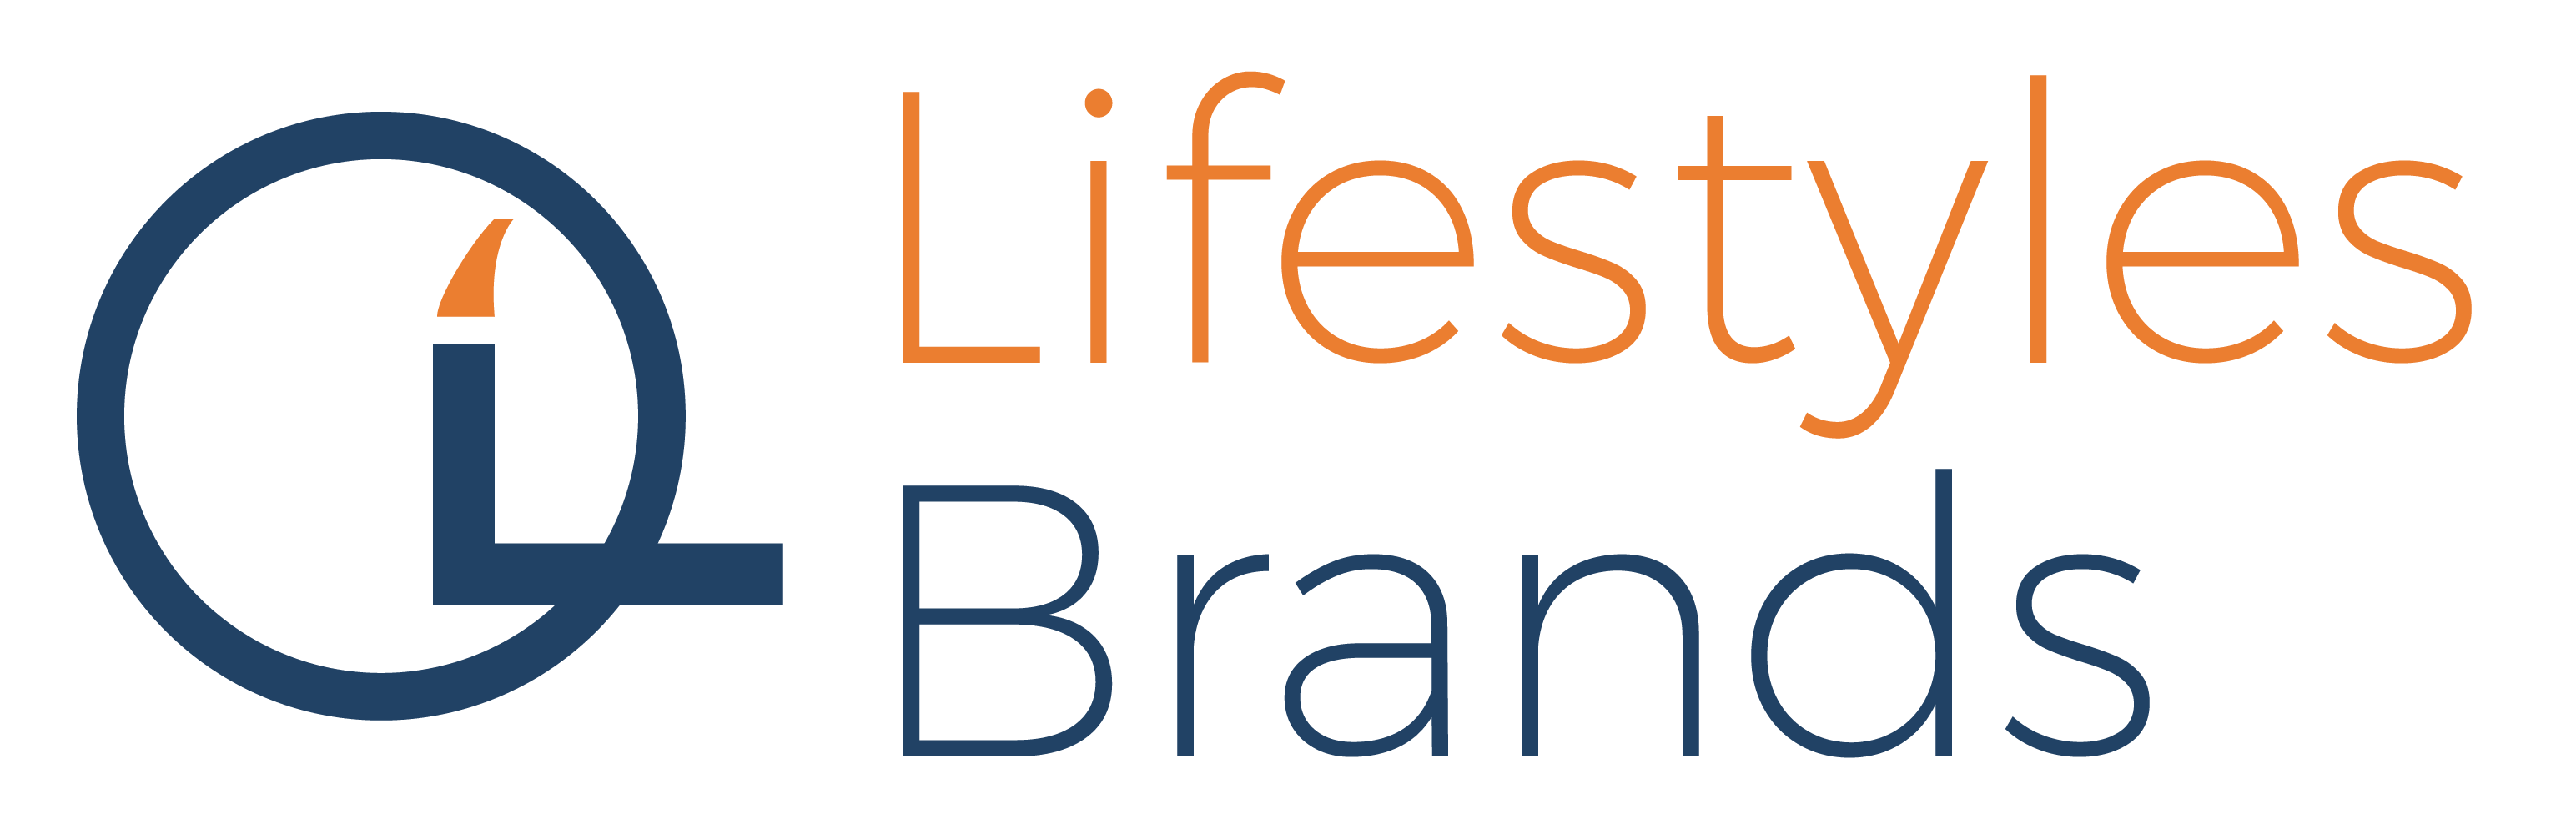 Chad O'L Public Relations & Events, LLC/O'L Lifestyles Brands's Logo